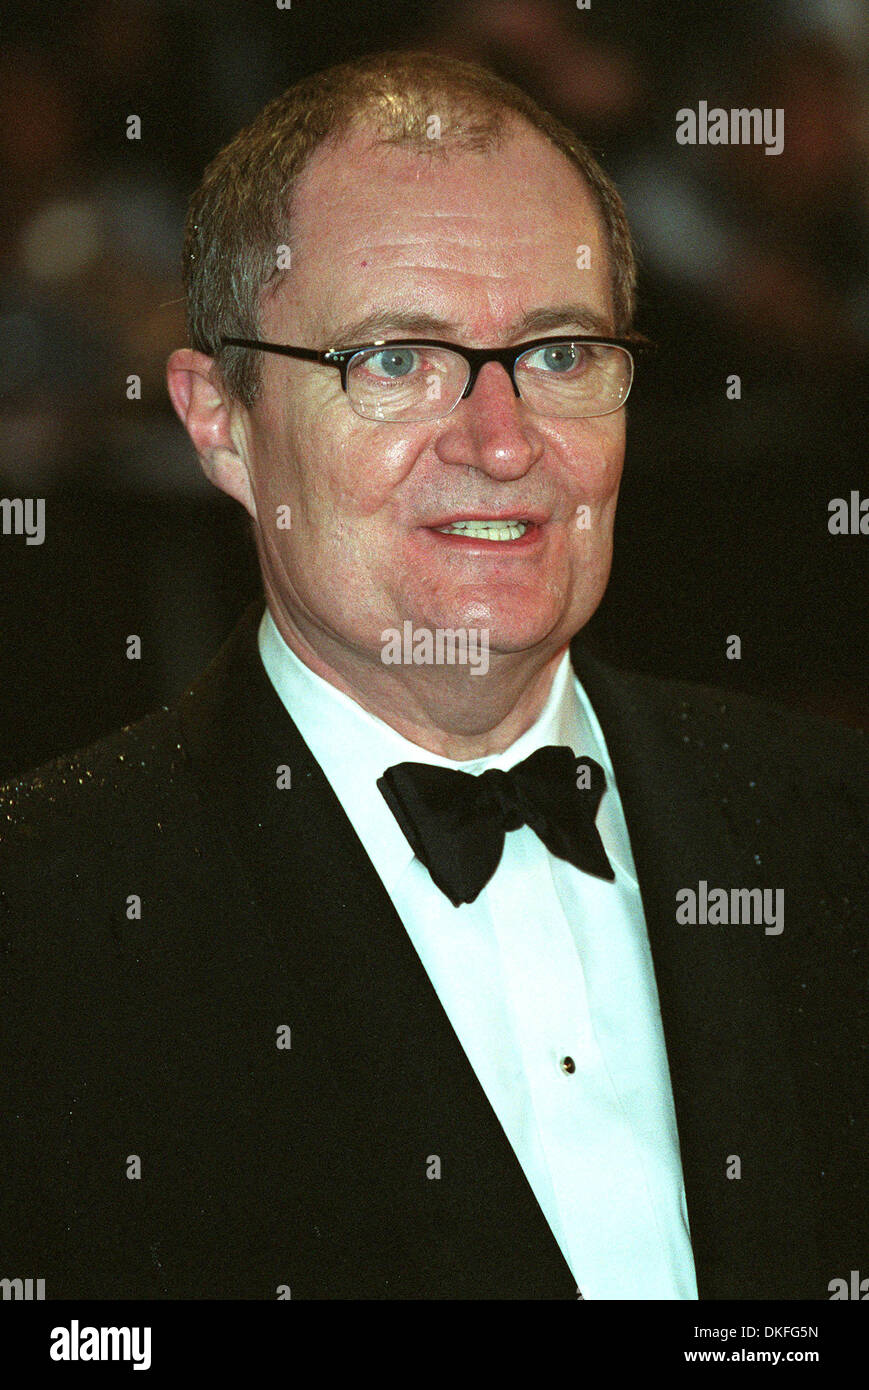 JIM BROADBENT.ACTOR.LAND.Bafta Film Awards, Londres, ENG.24/02/2002.BP95G33C Foto de stock